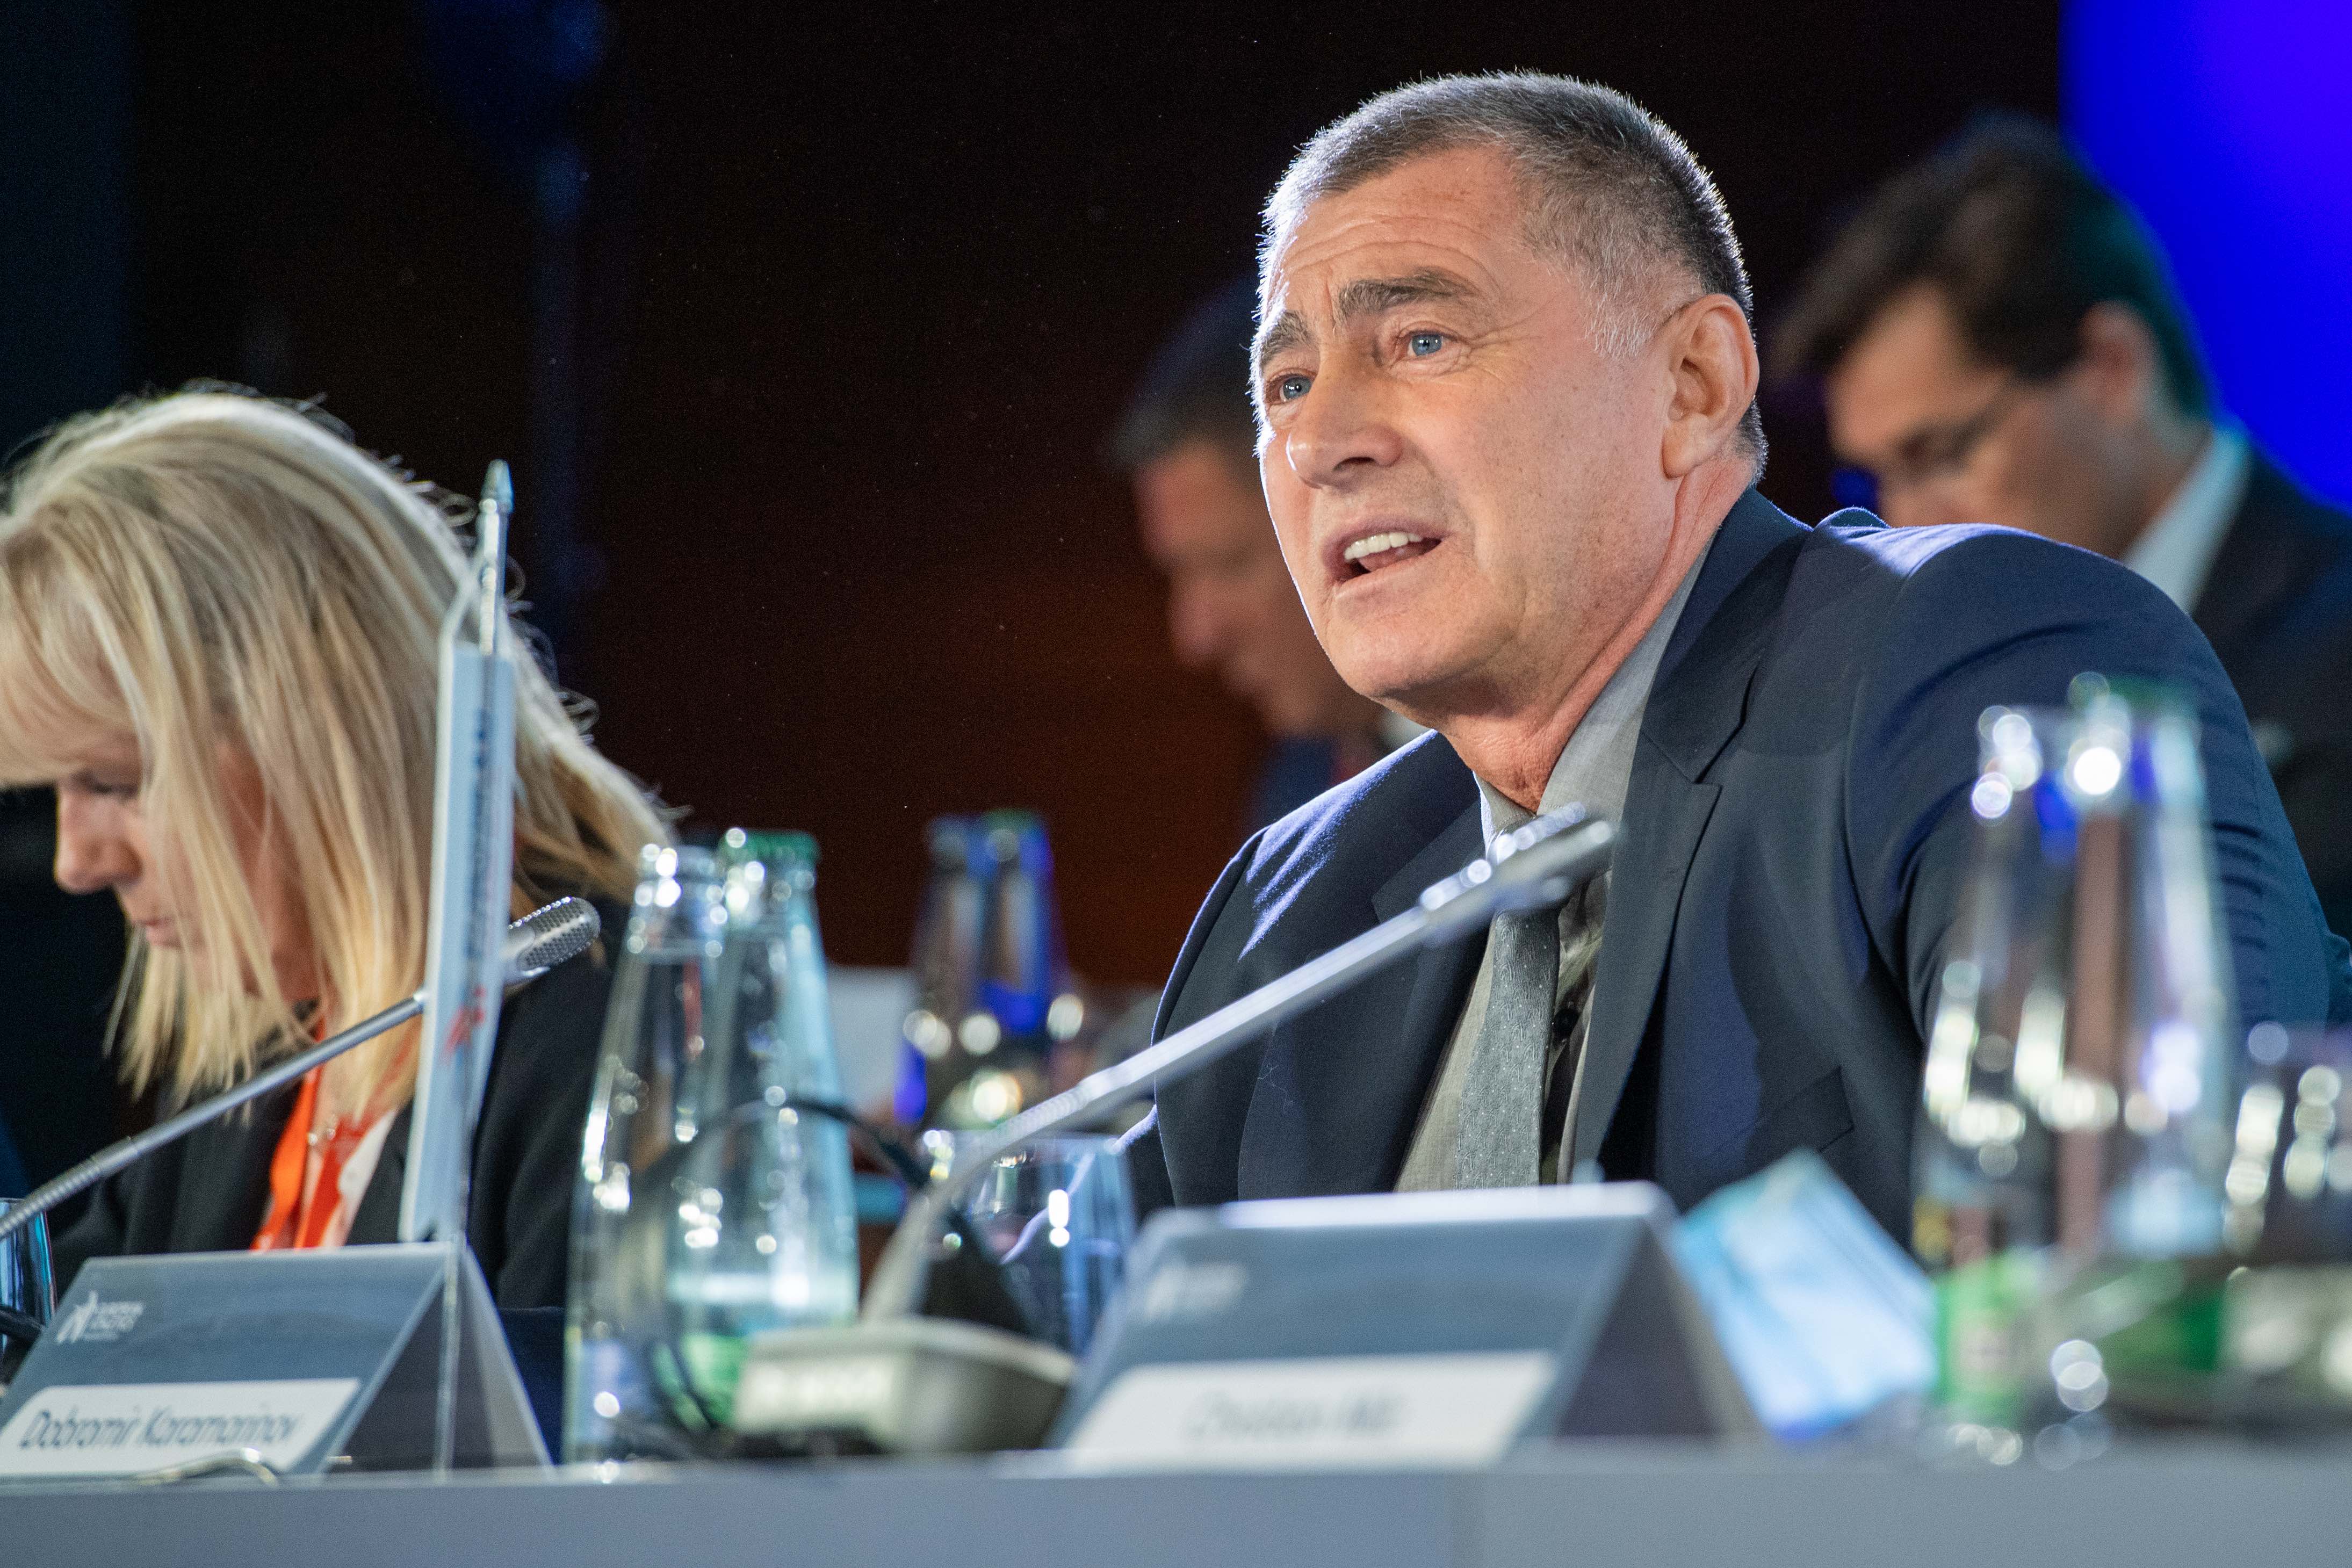 New European Athletics president Dobromir Karamarinov looks forward to jam-packed 2022 season on the track 